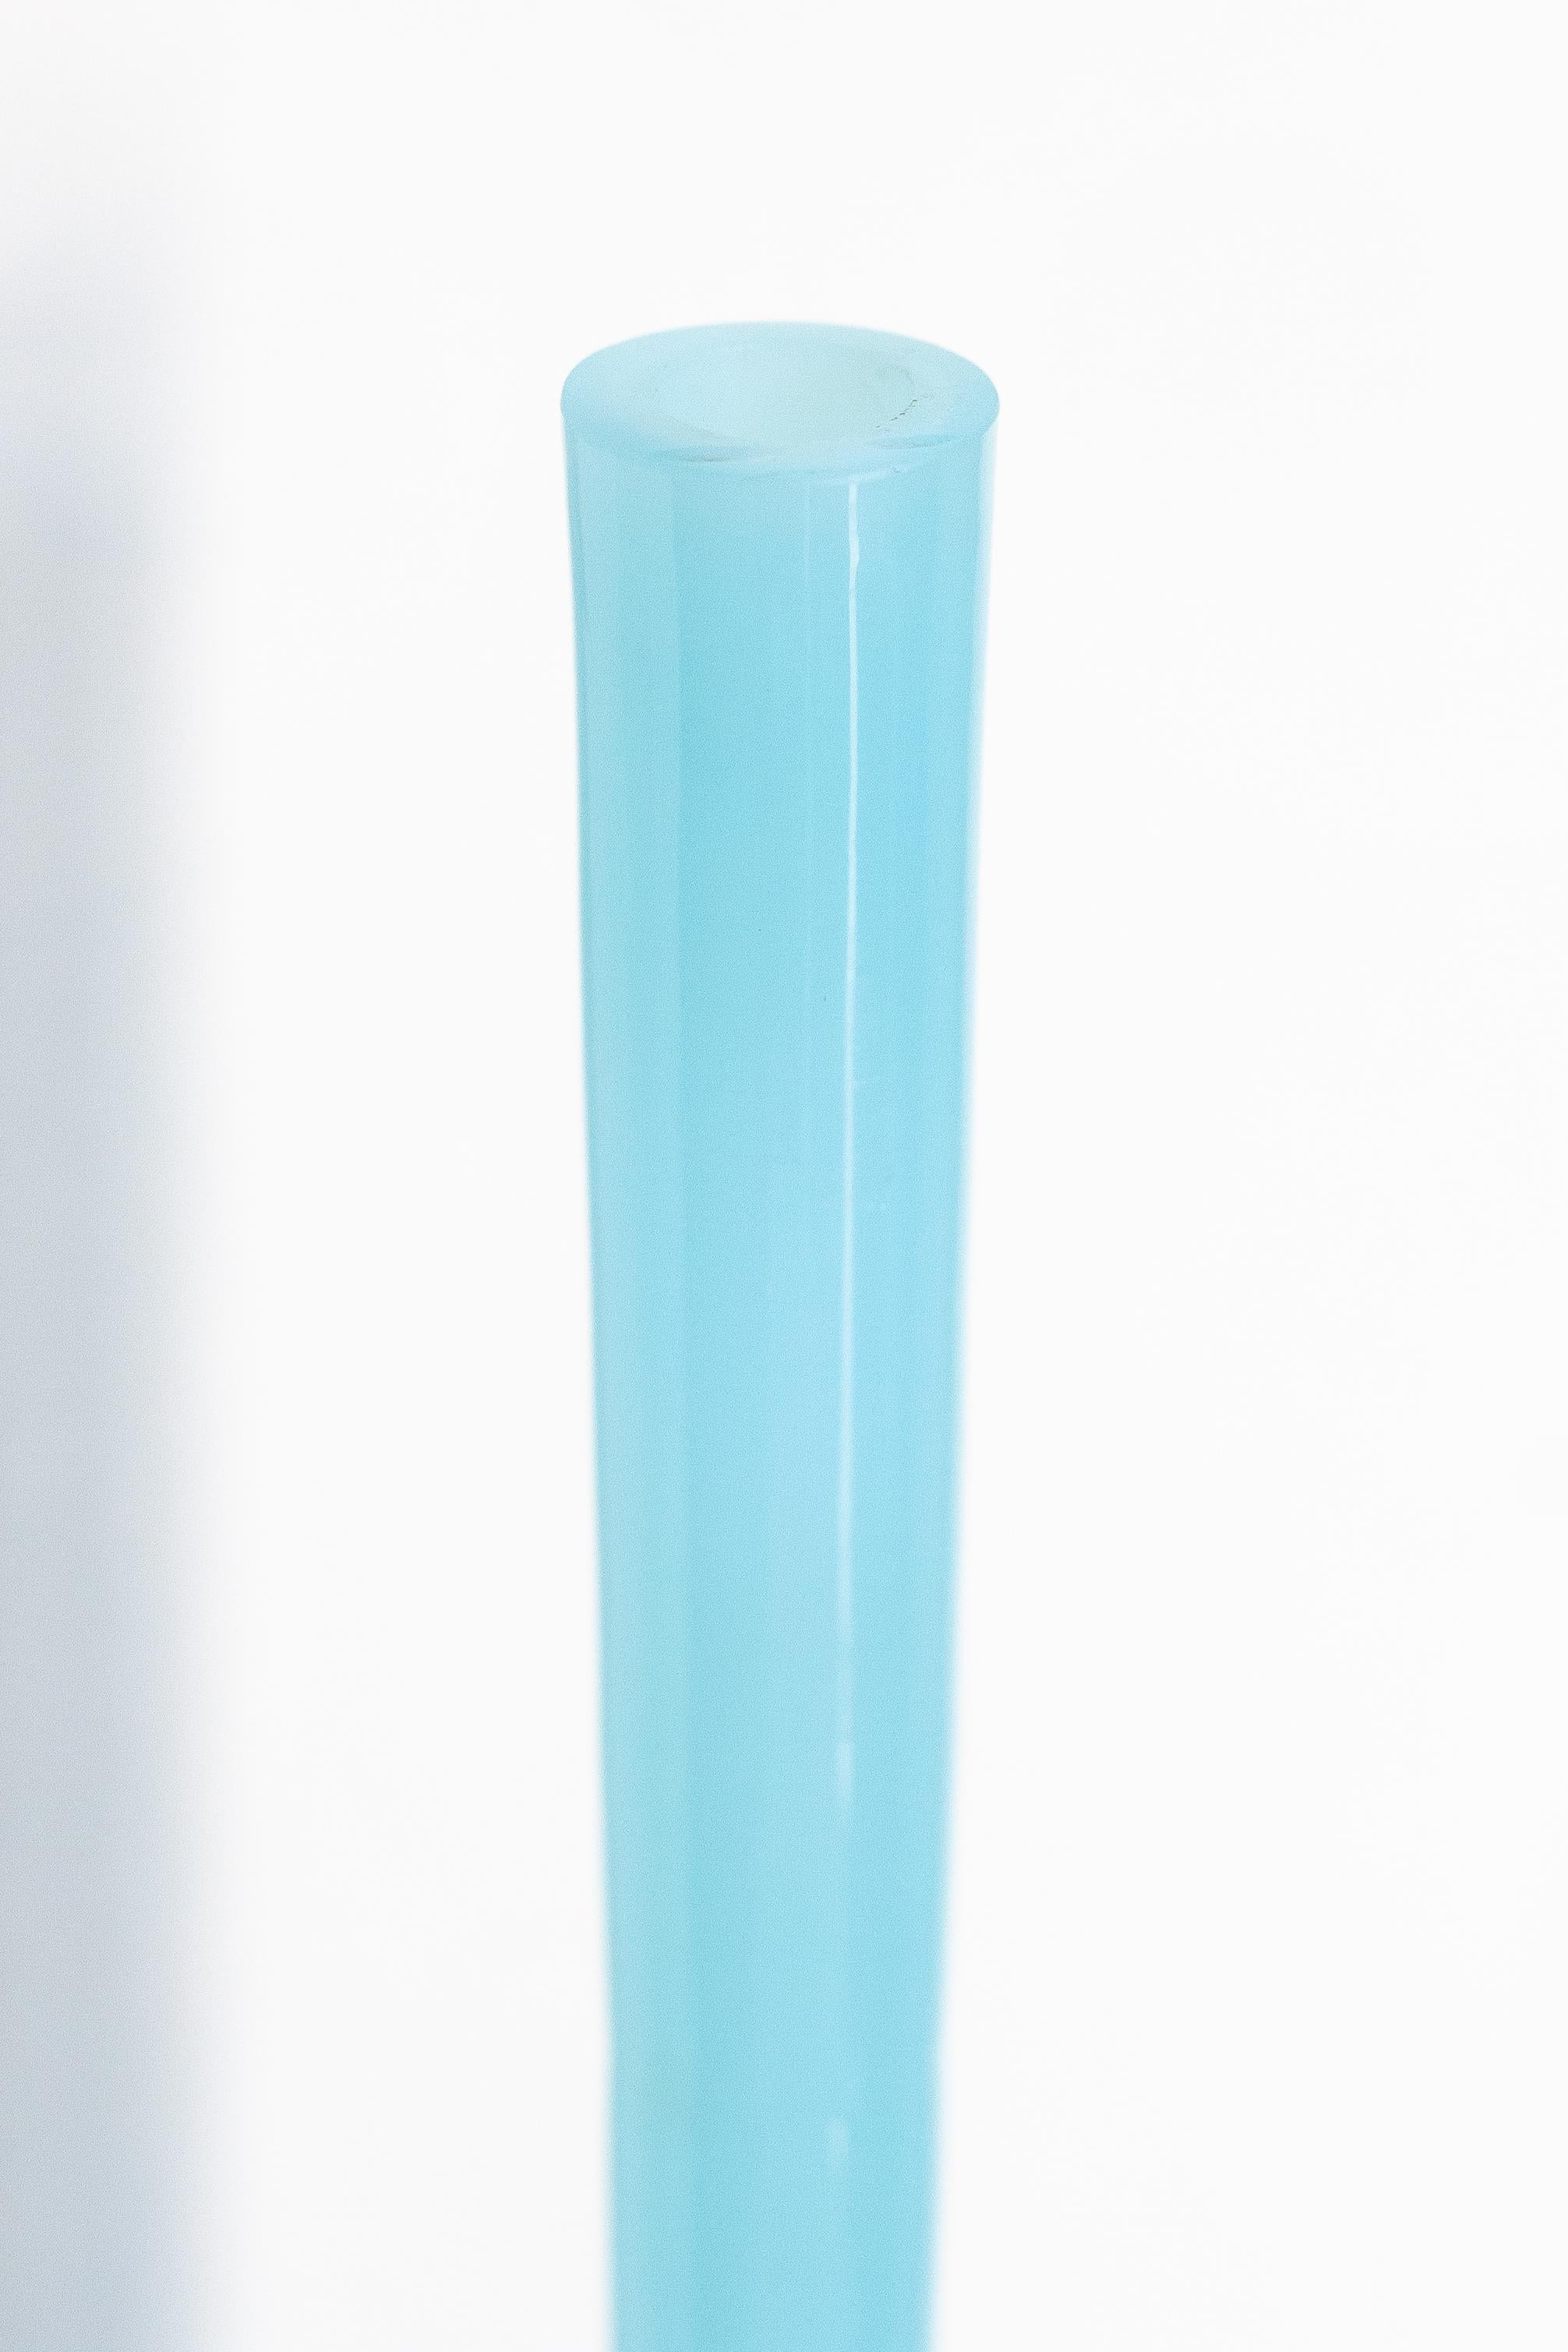 Mid Century Blue Decorative Glass Vase, Europe, 1960s For Sale 4